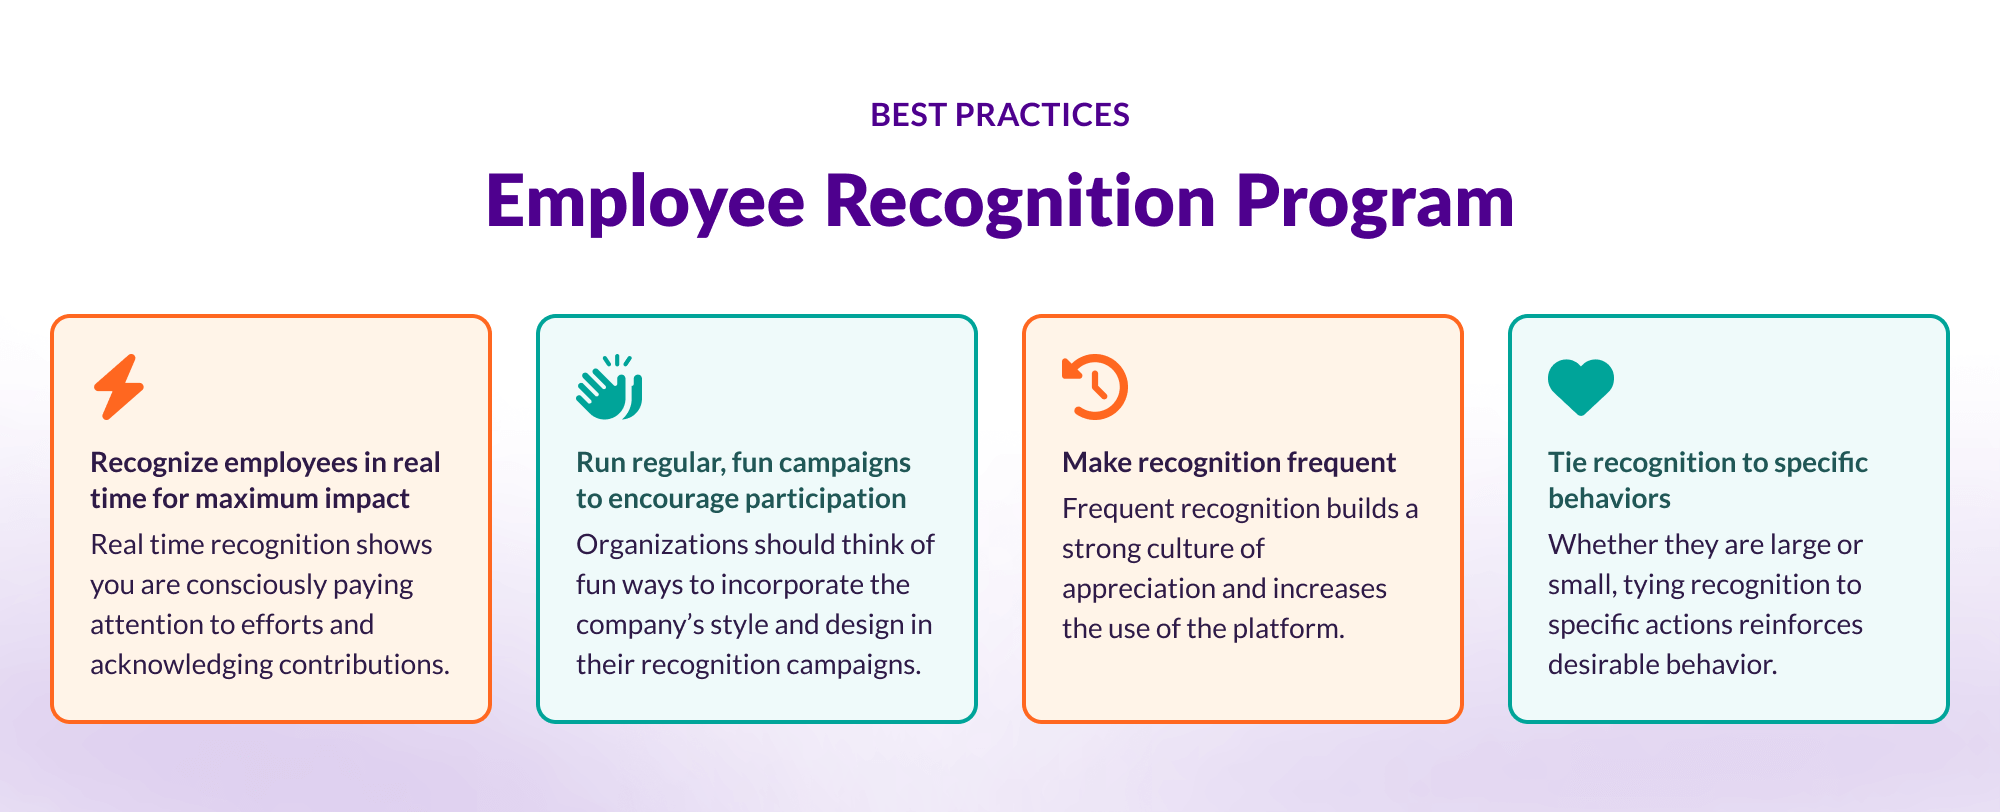 Employee Recognition Program Best Practices